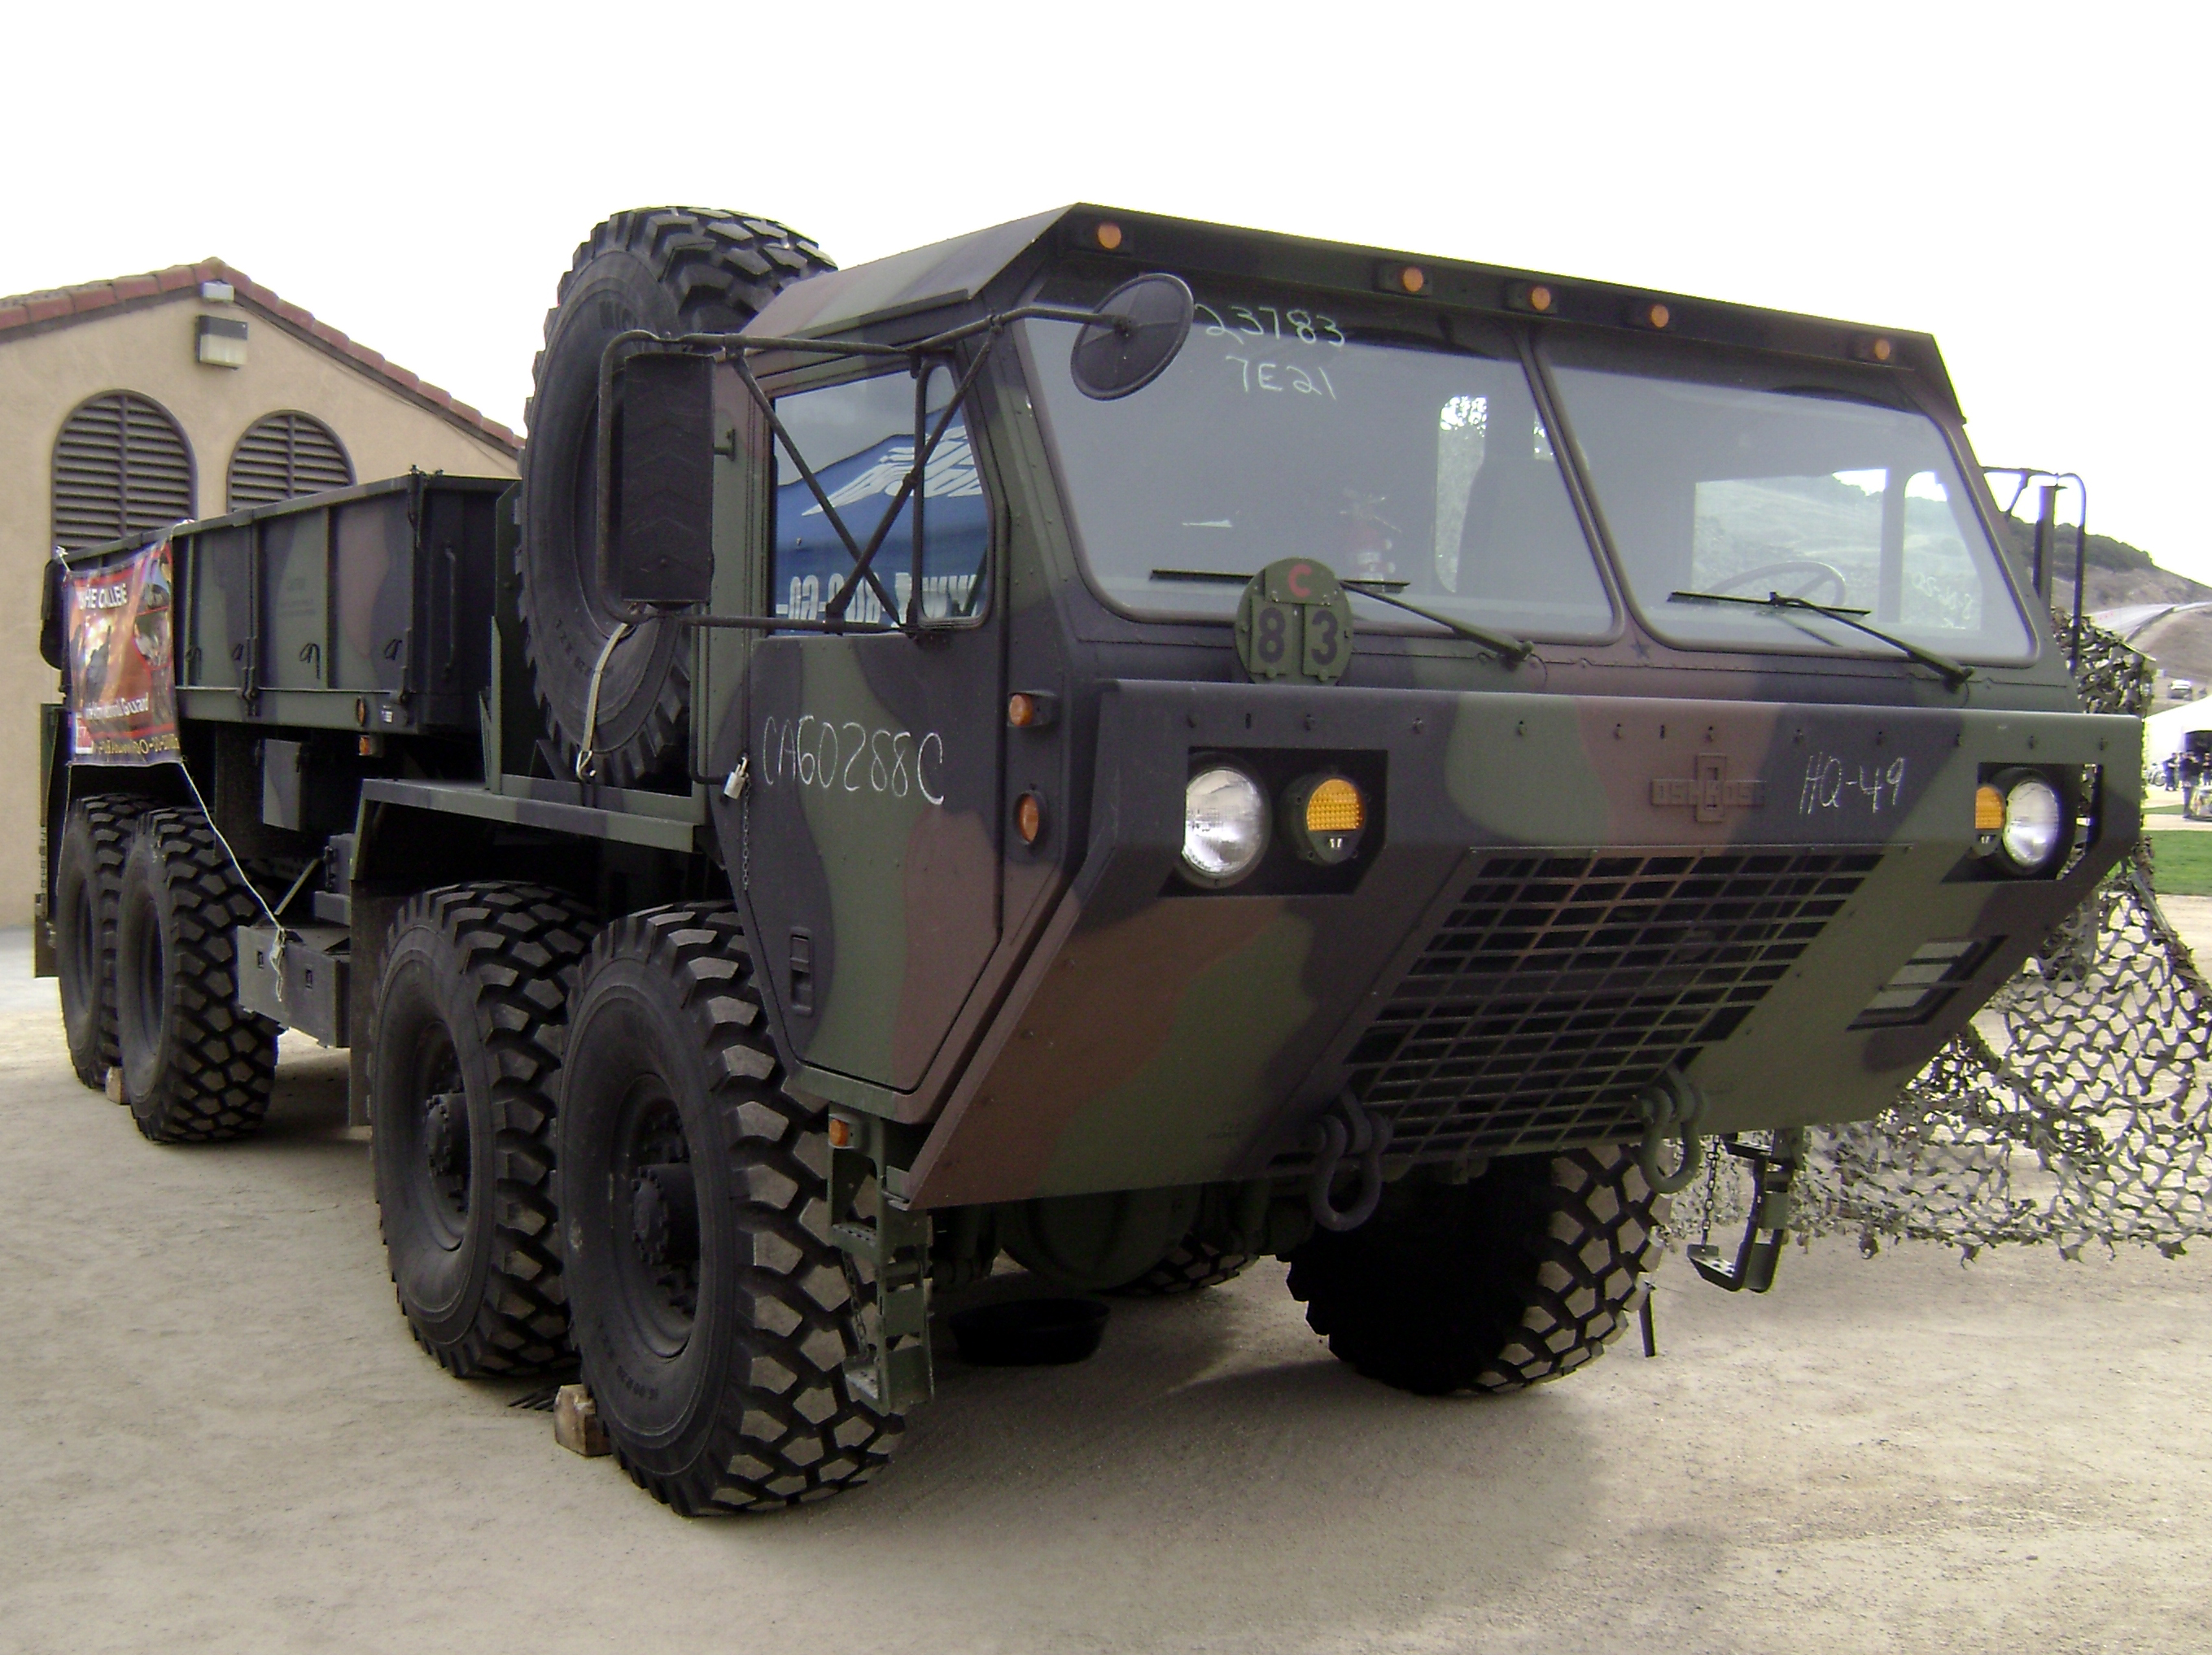 Almost forgot. Oshkosh military vehicle *PICS* - AR15.COM